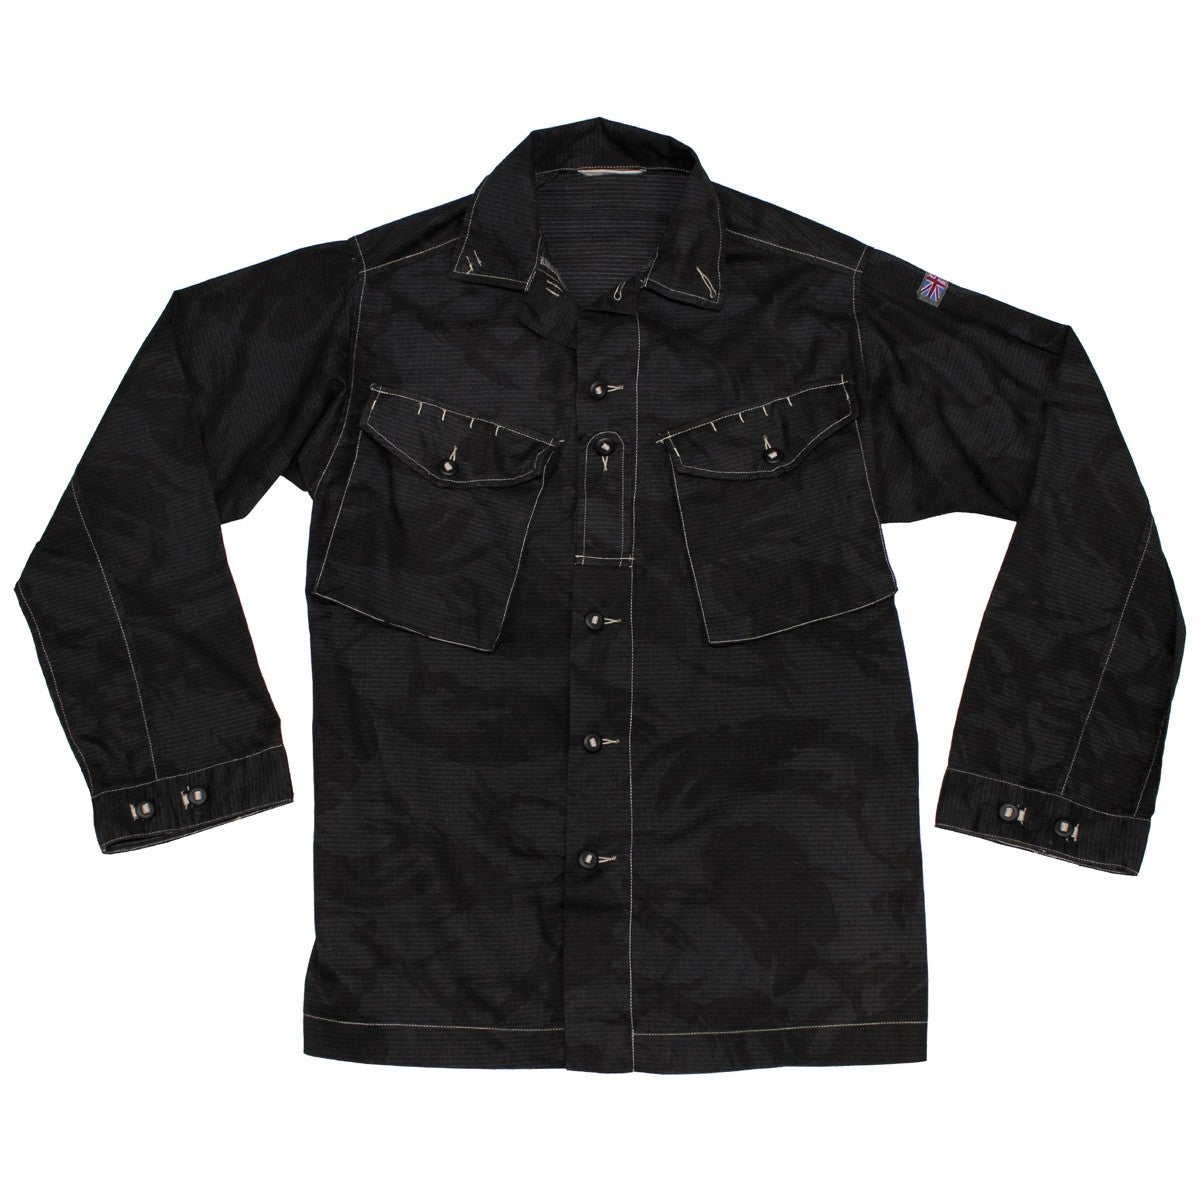 British Military Surplus Combat Jacket/Shirt - Black Dye